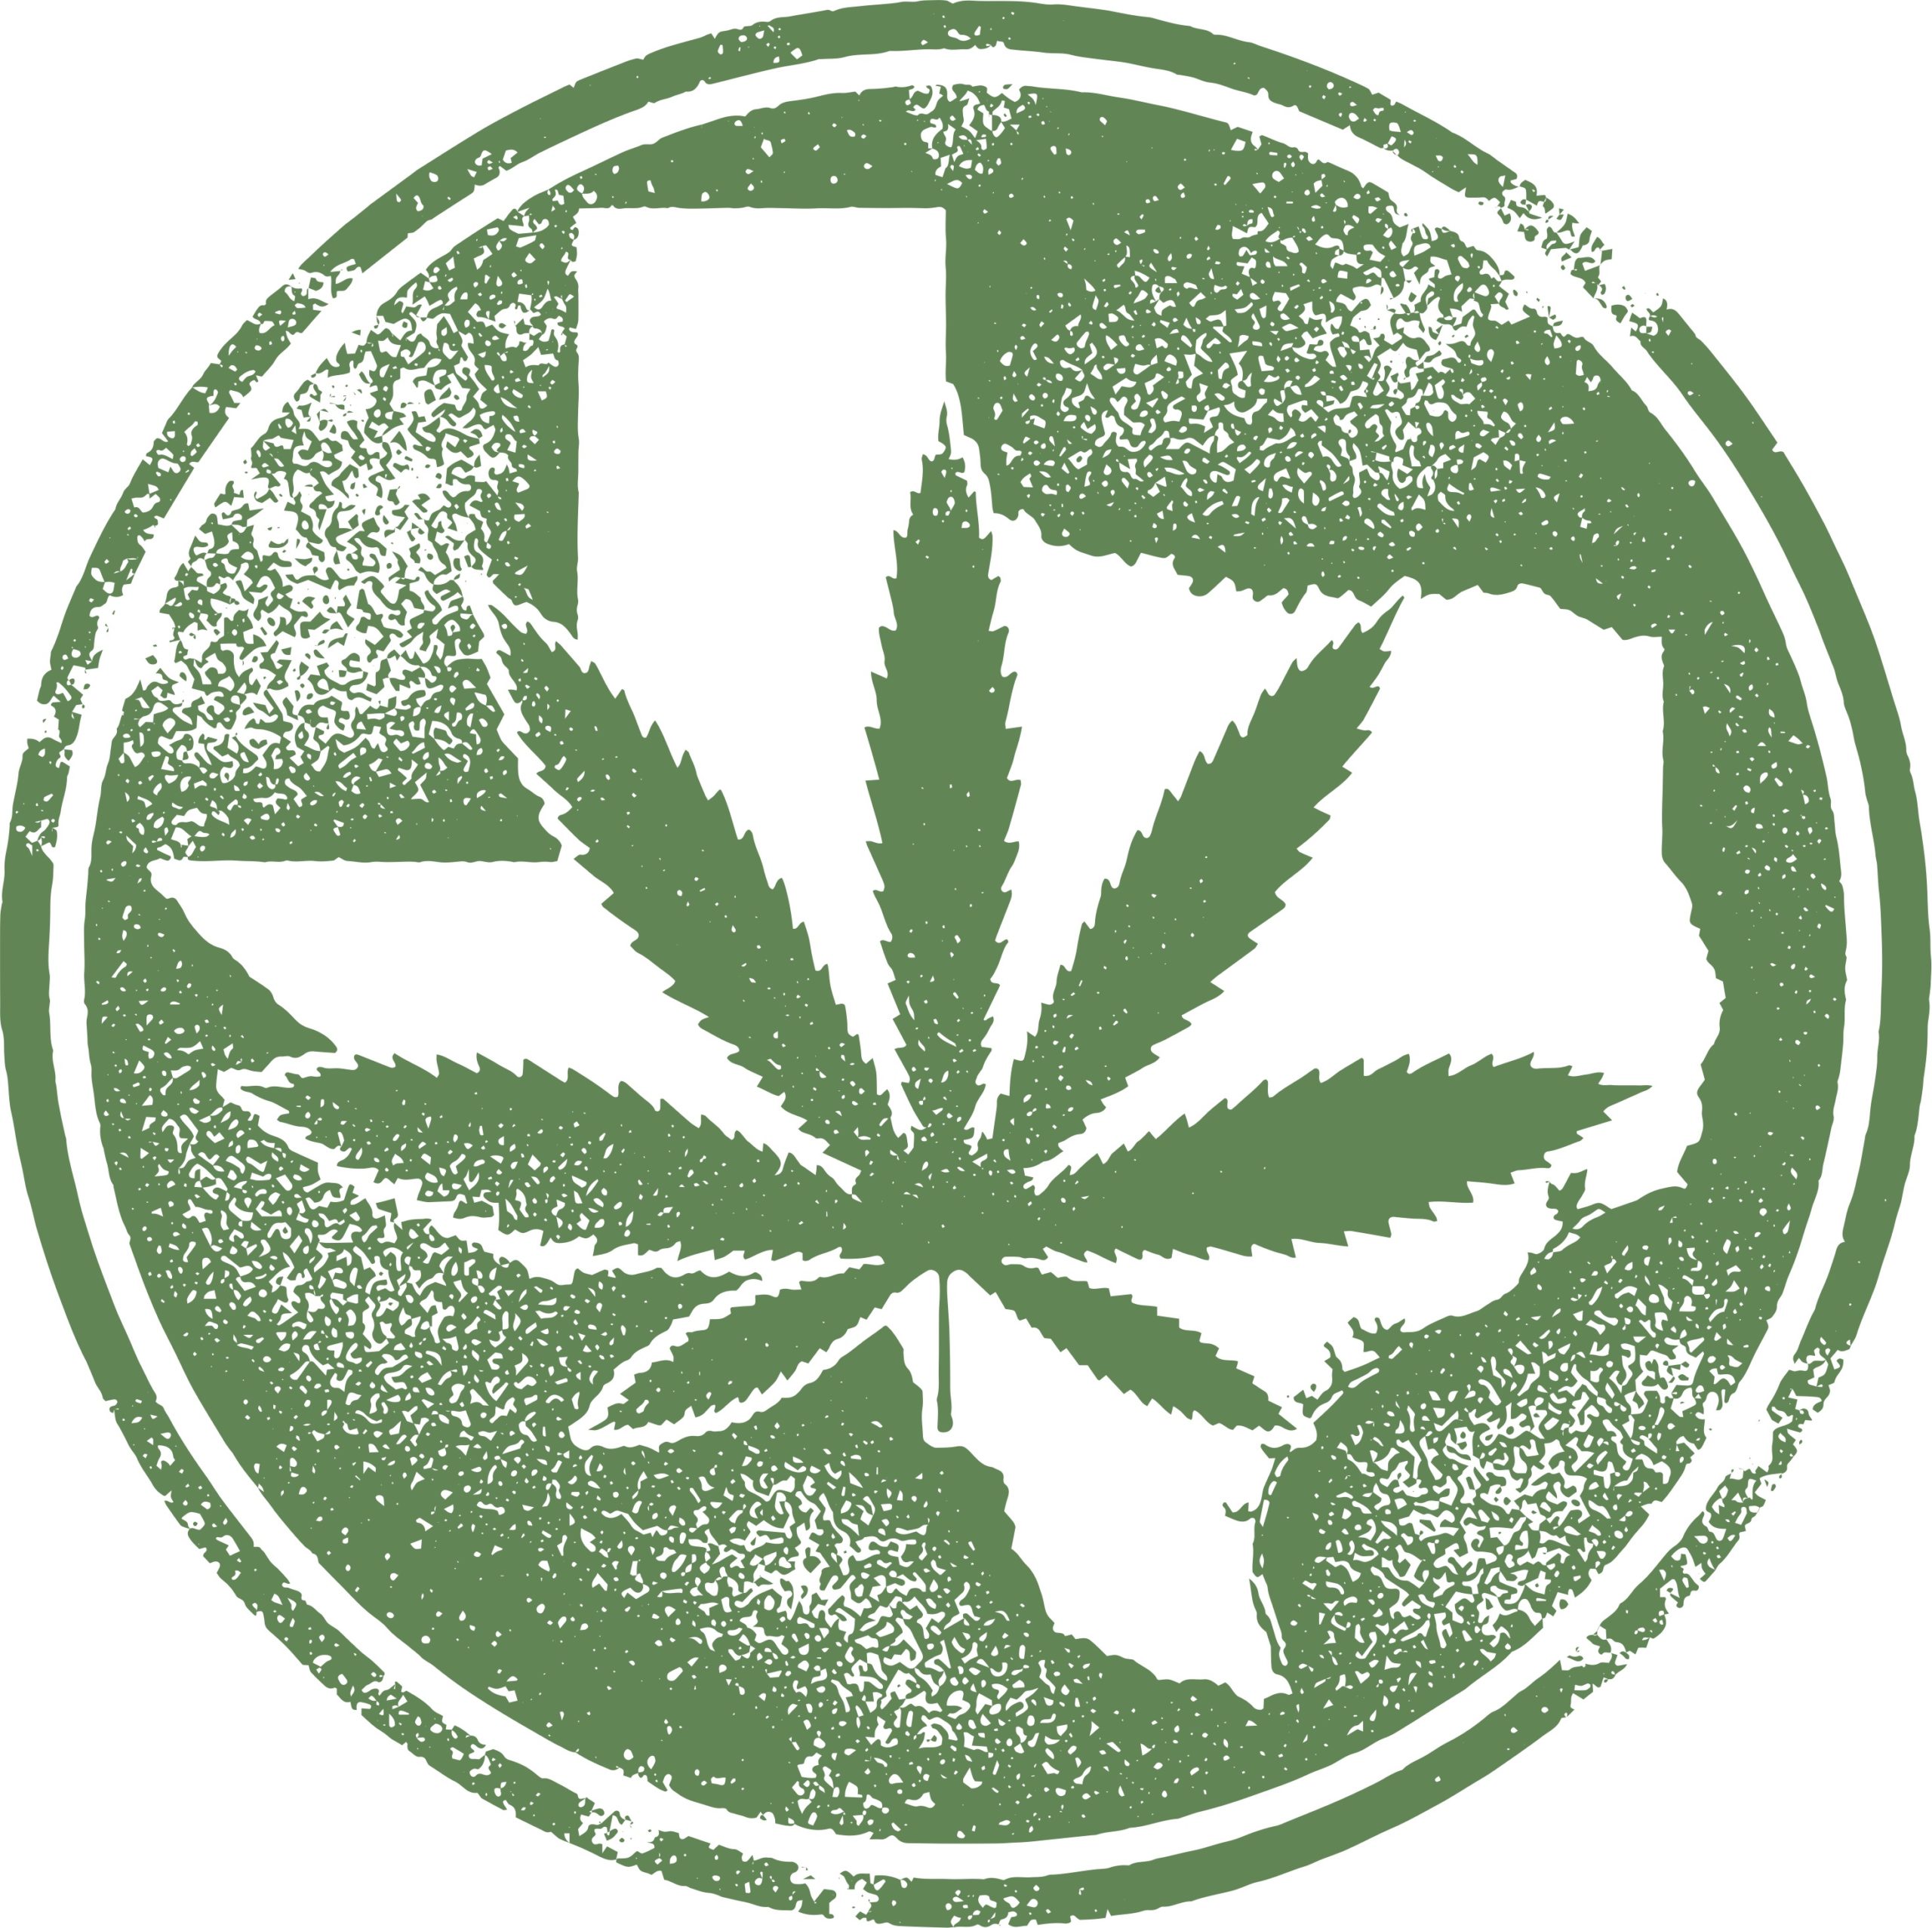 Growing weed in texas laws